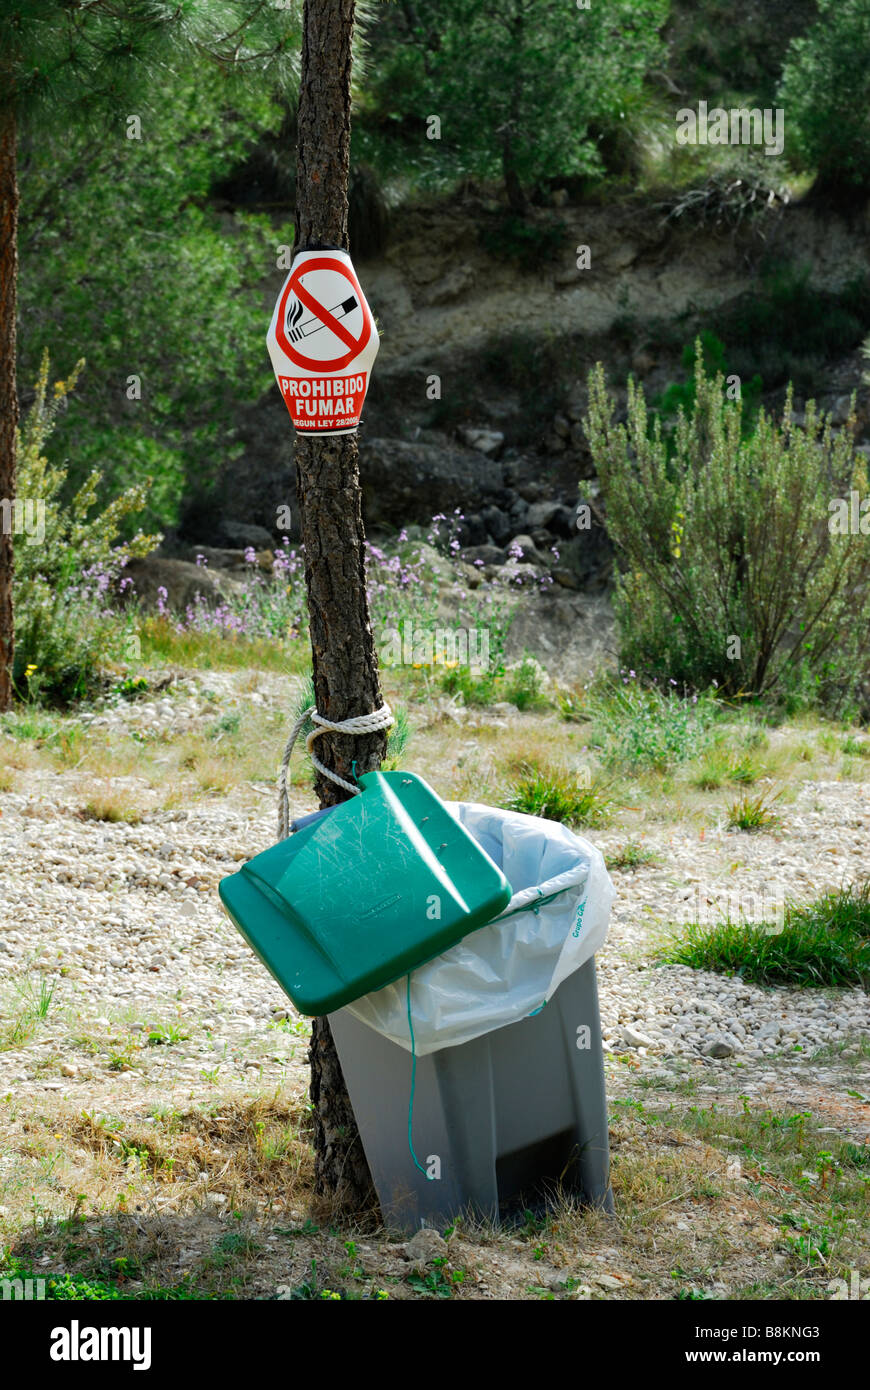 No Smoking Sign on a Tree with a Rubbish Bin, Murcia region Spain Stock Photo